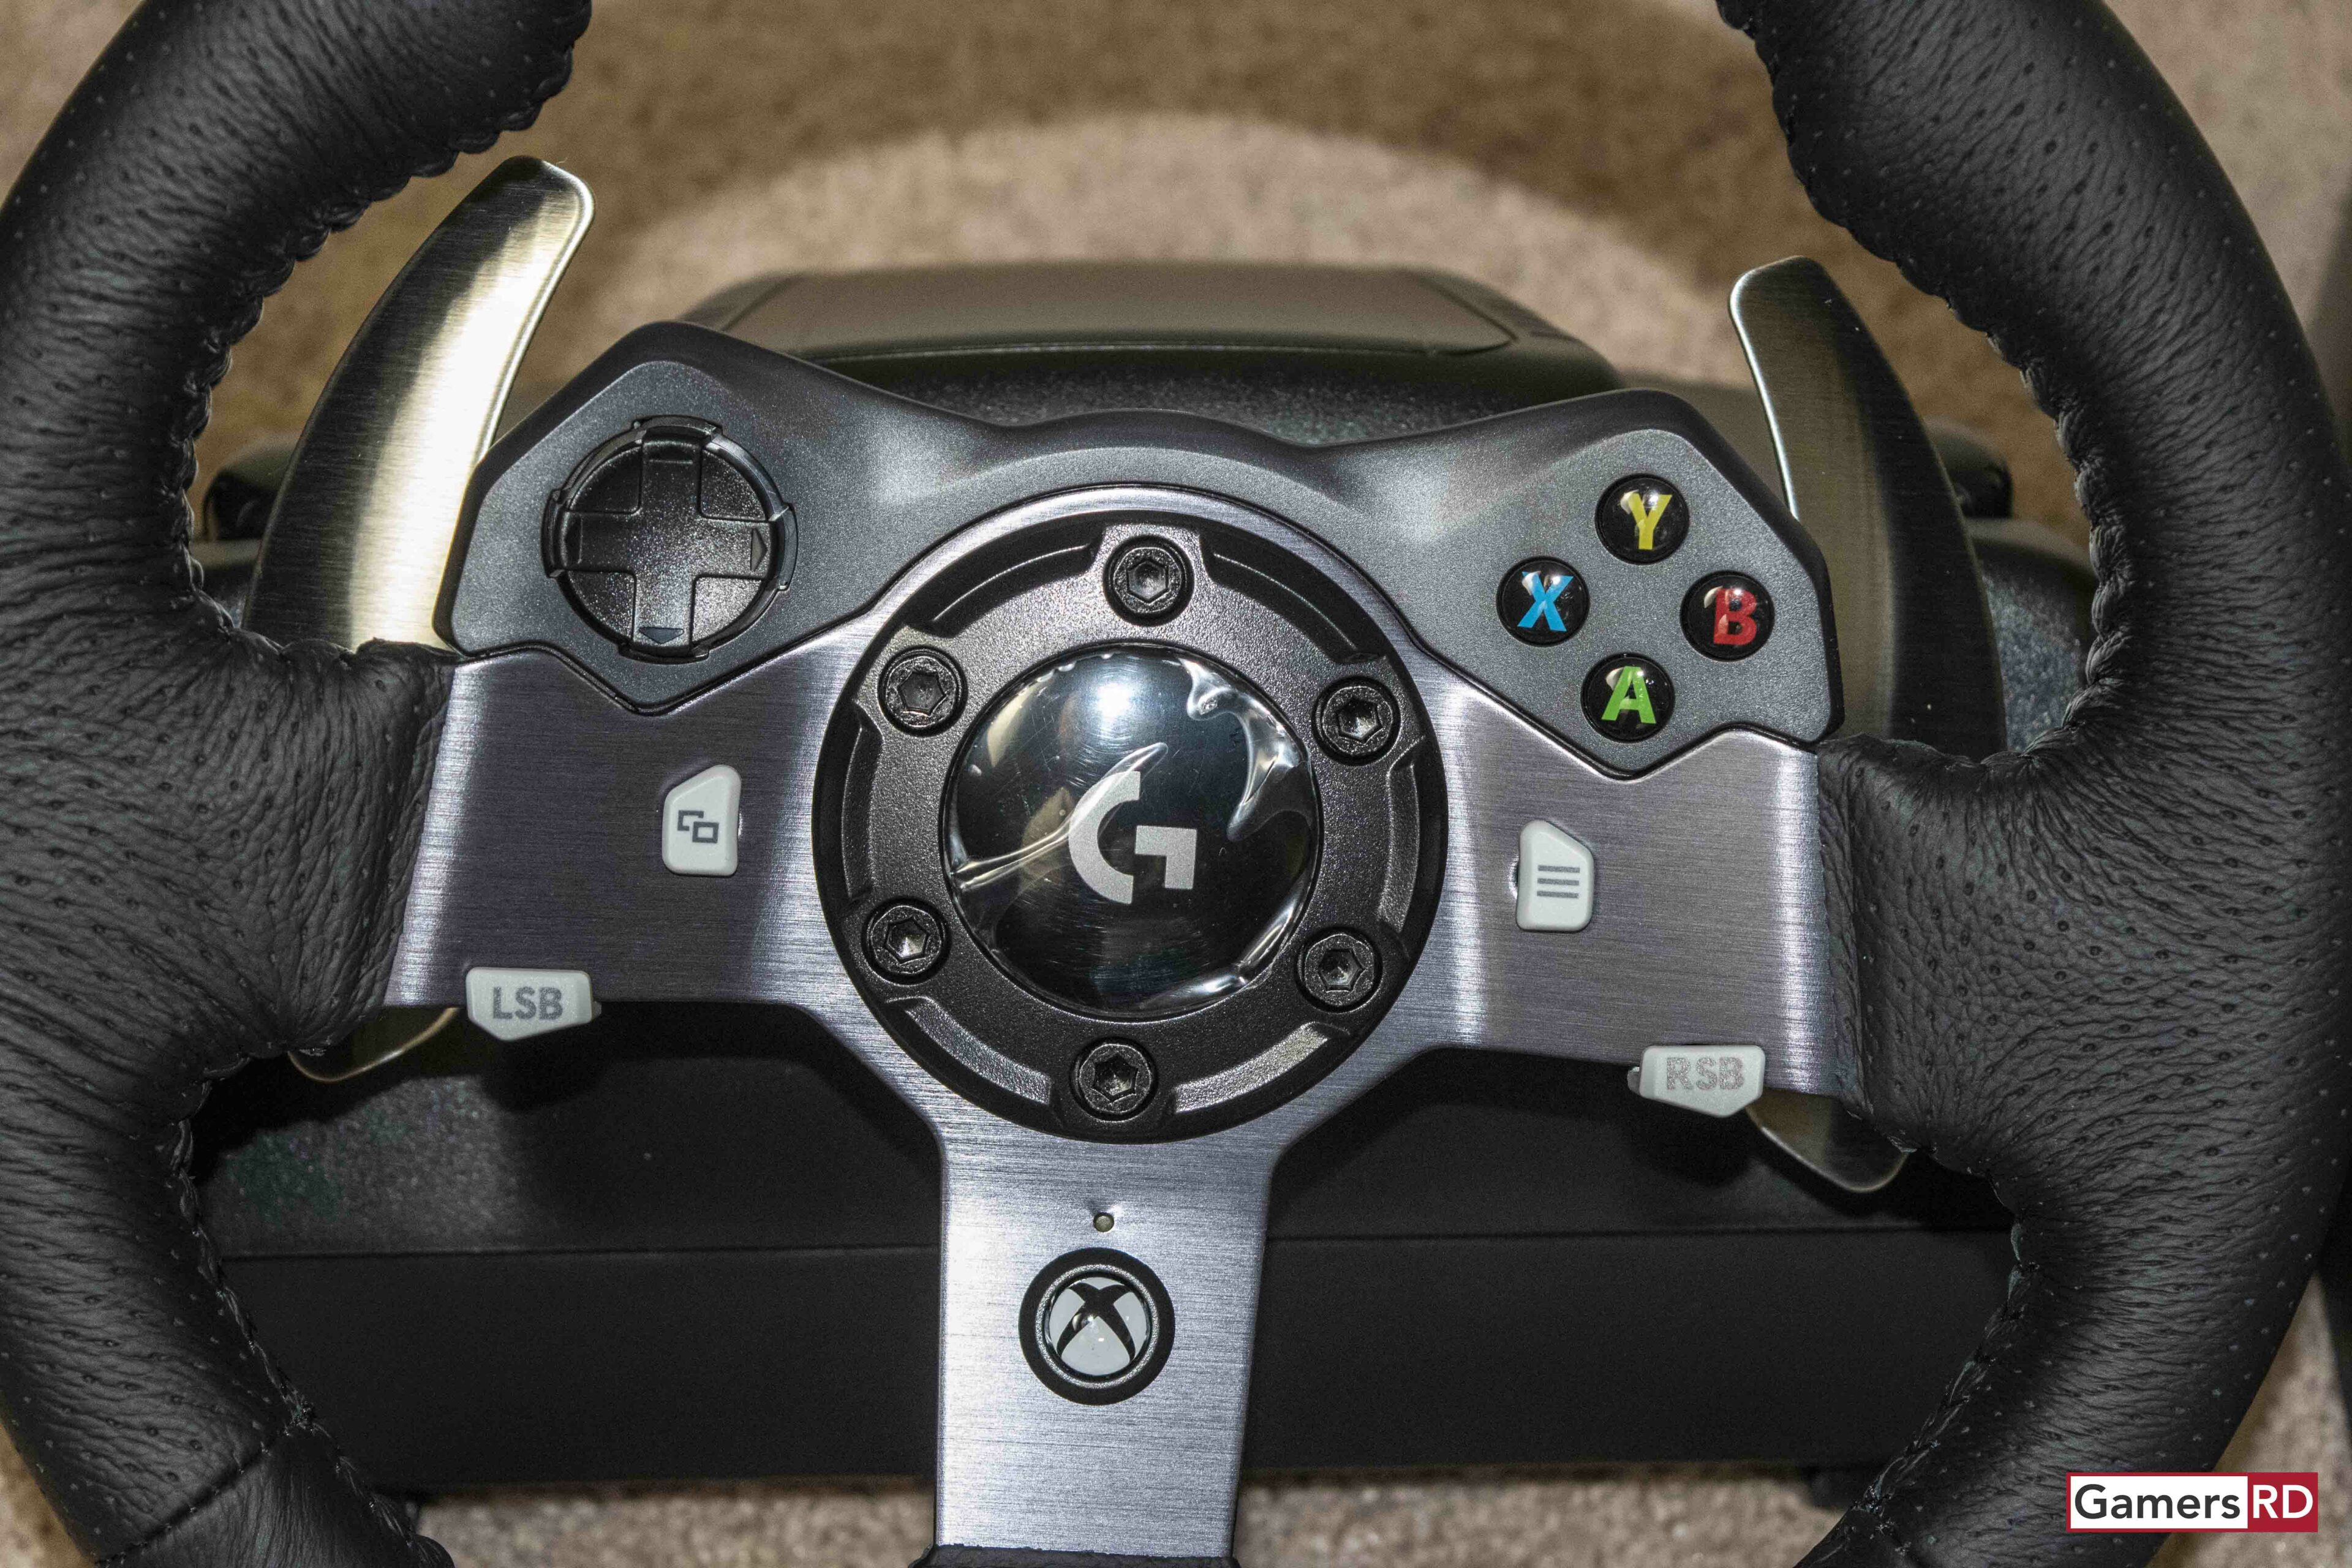 Logitech G920 Driving Force Racing Wheel Review, 3 GamerSRD